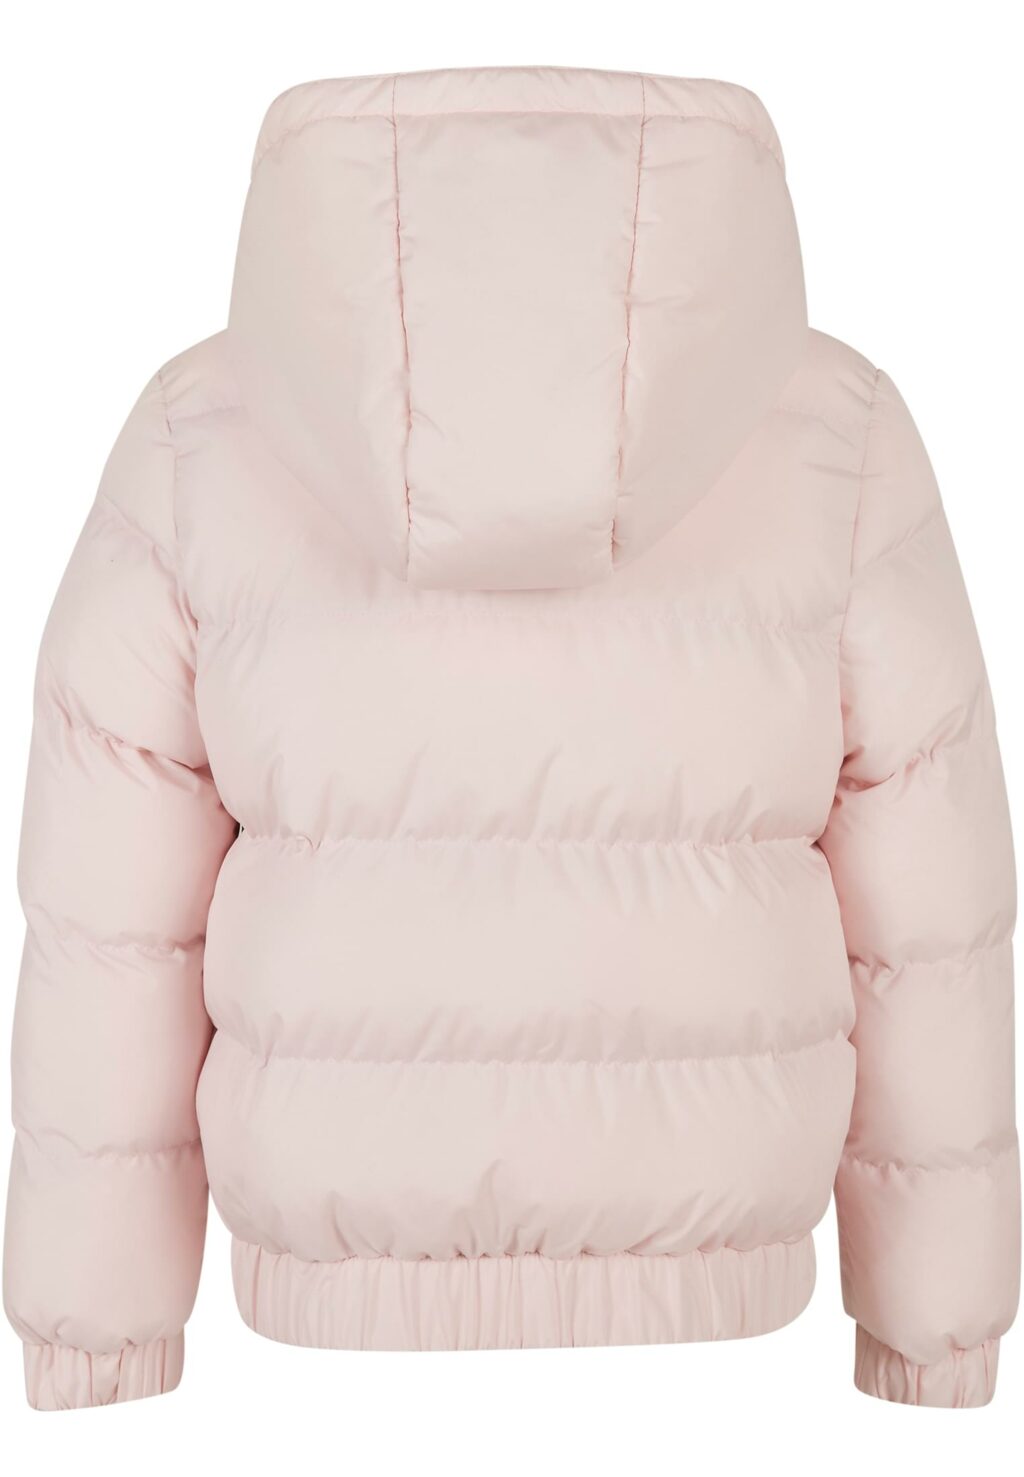 Girls Hooded Puffer Jacket pink UCK1756